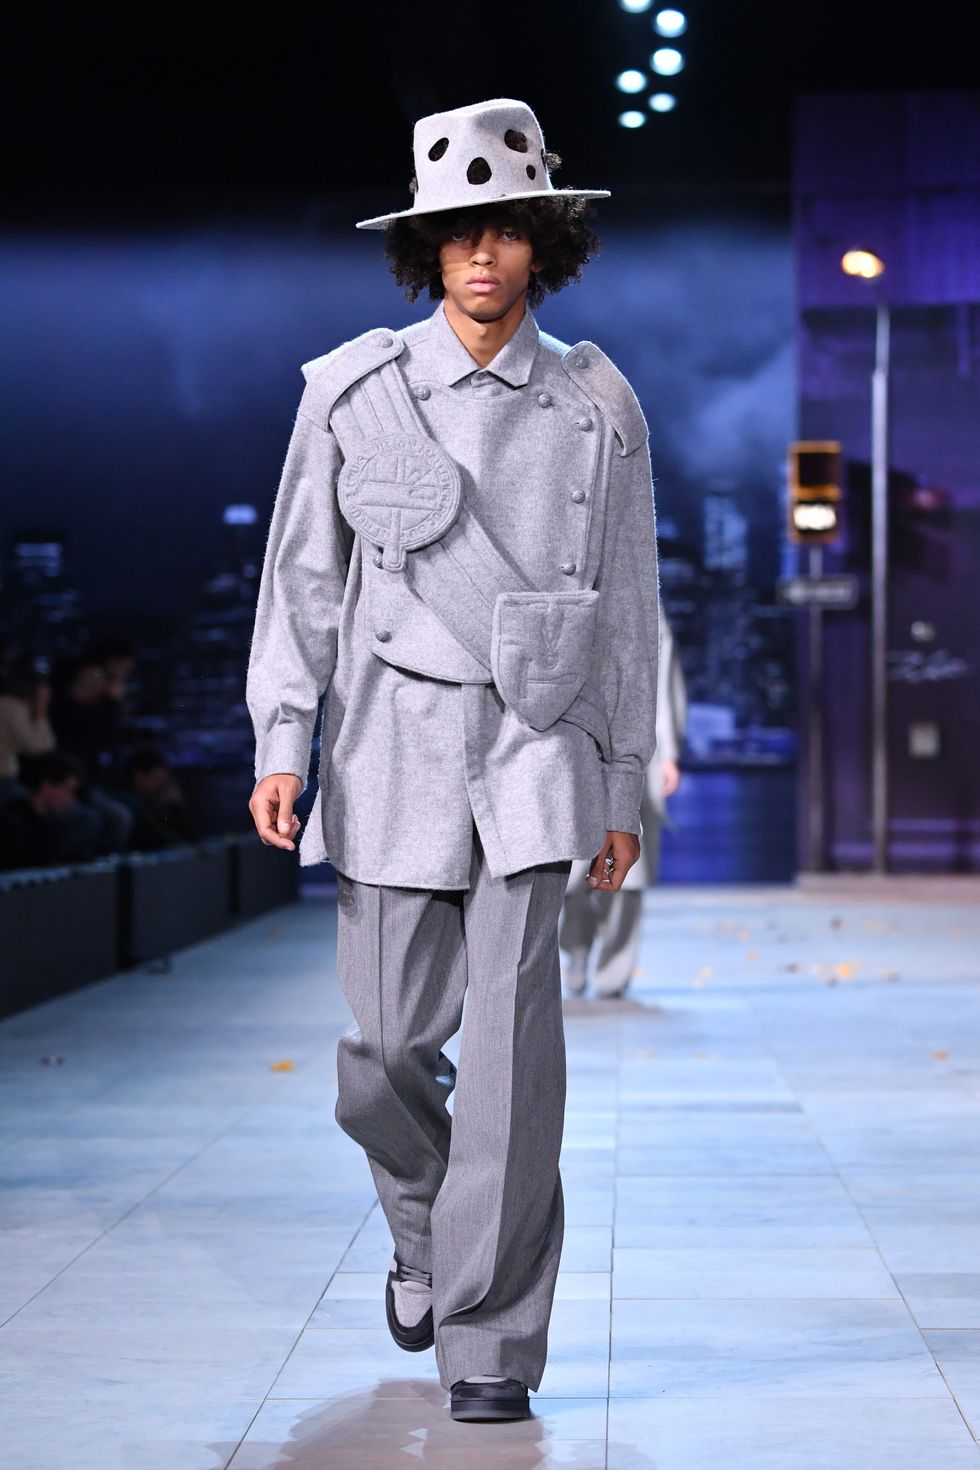 Louis Vuitton Fall 2019 Menswear Show Pays Ode To Michael Jackson